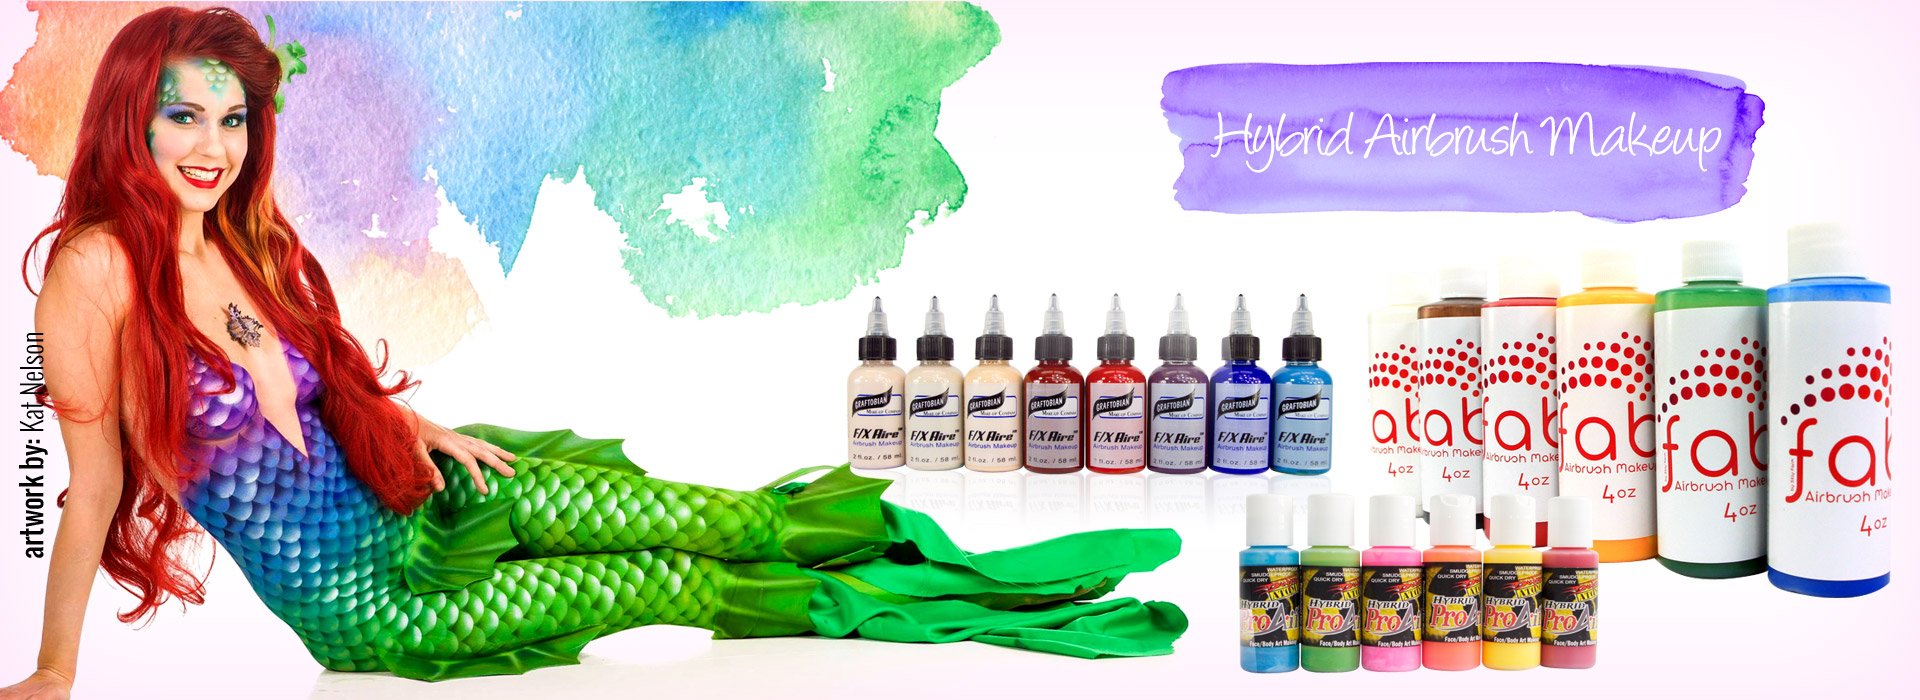 Inspire H2O Airbrush Kits - Water Based Airbrush Paint – Custom Paints Inc